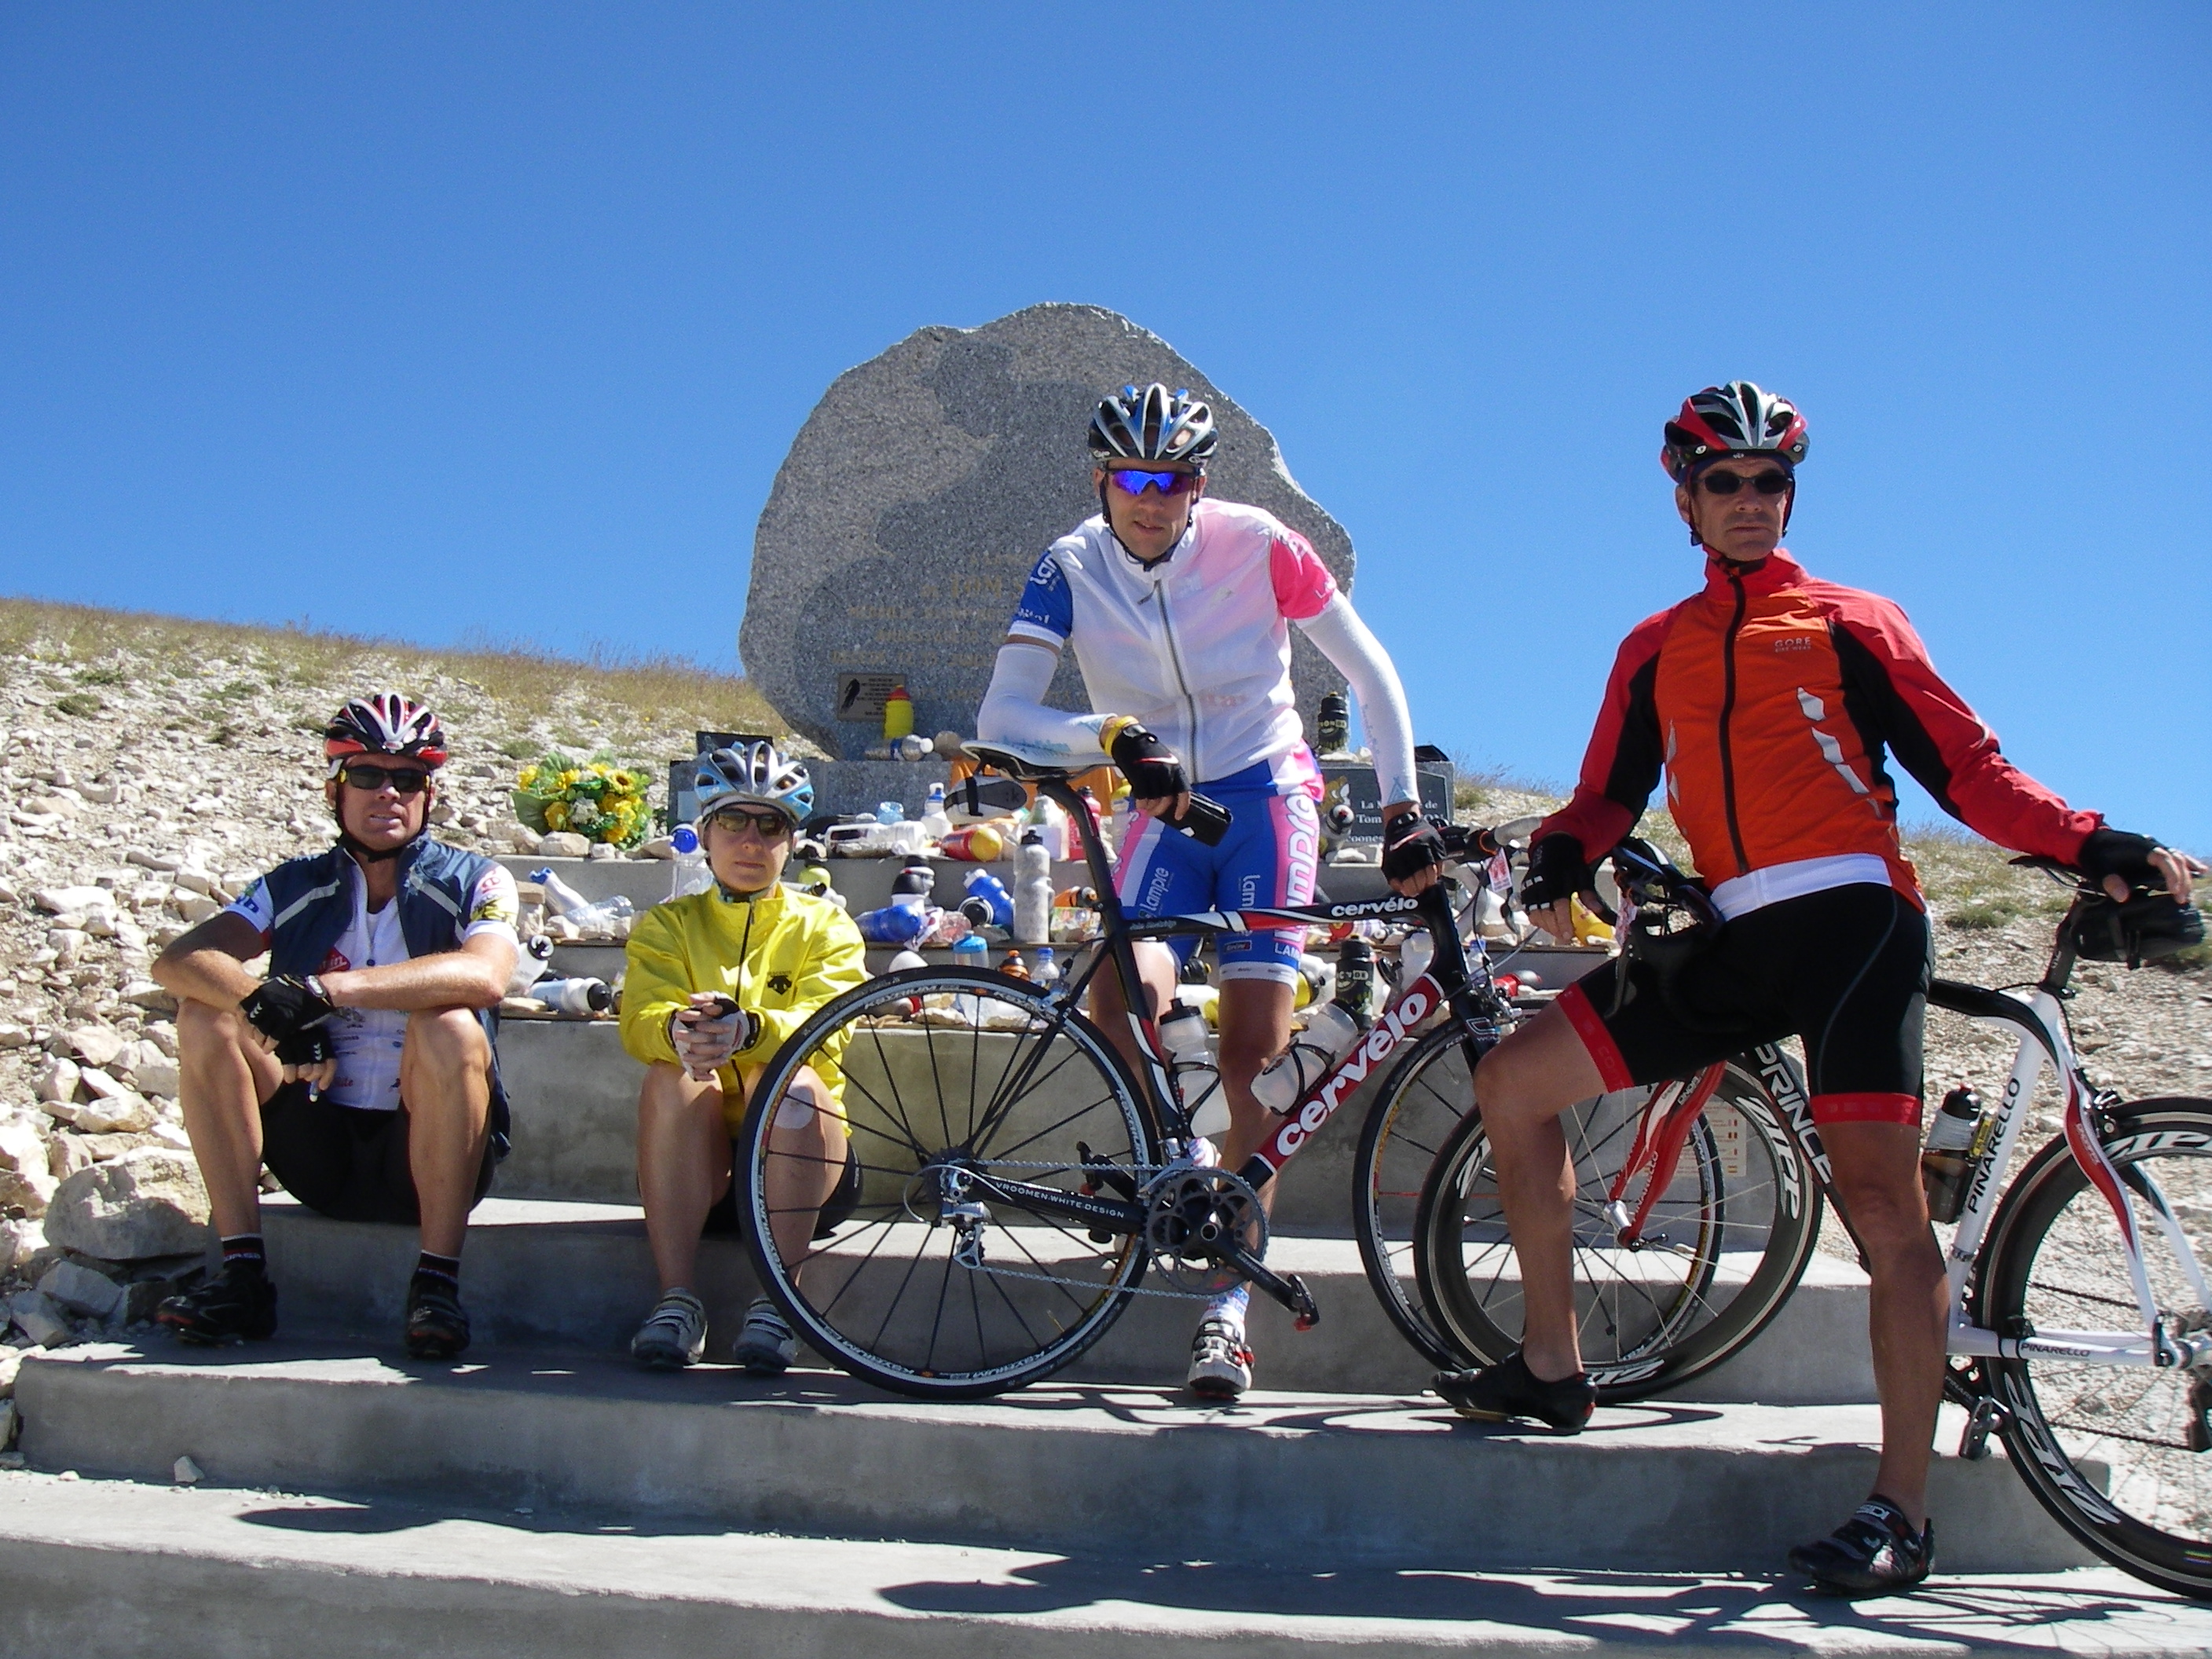 Cyclomundo riders at Tom Simpson's memorial